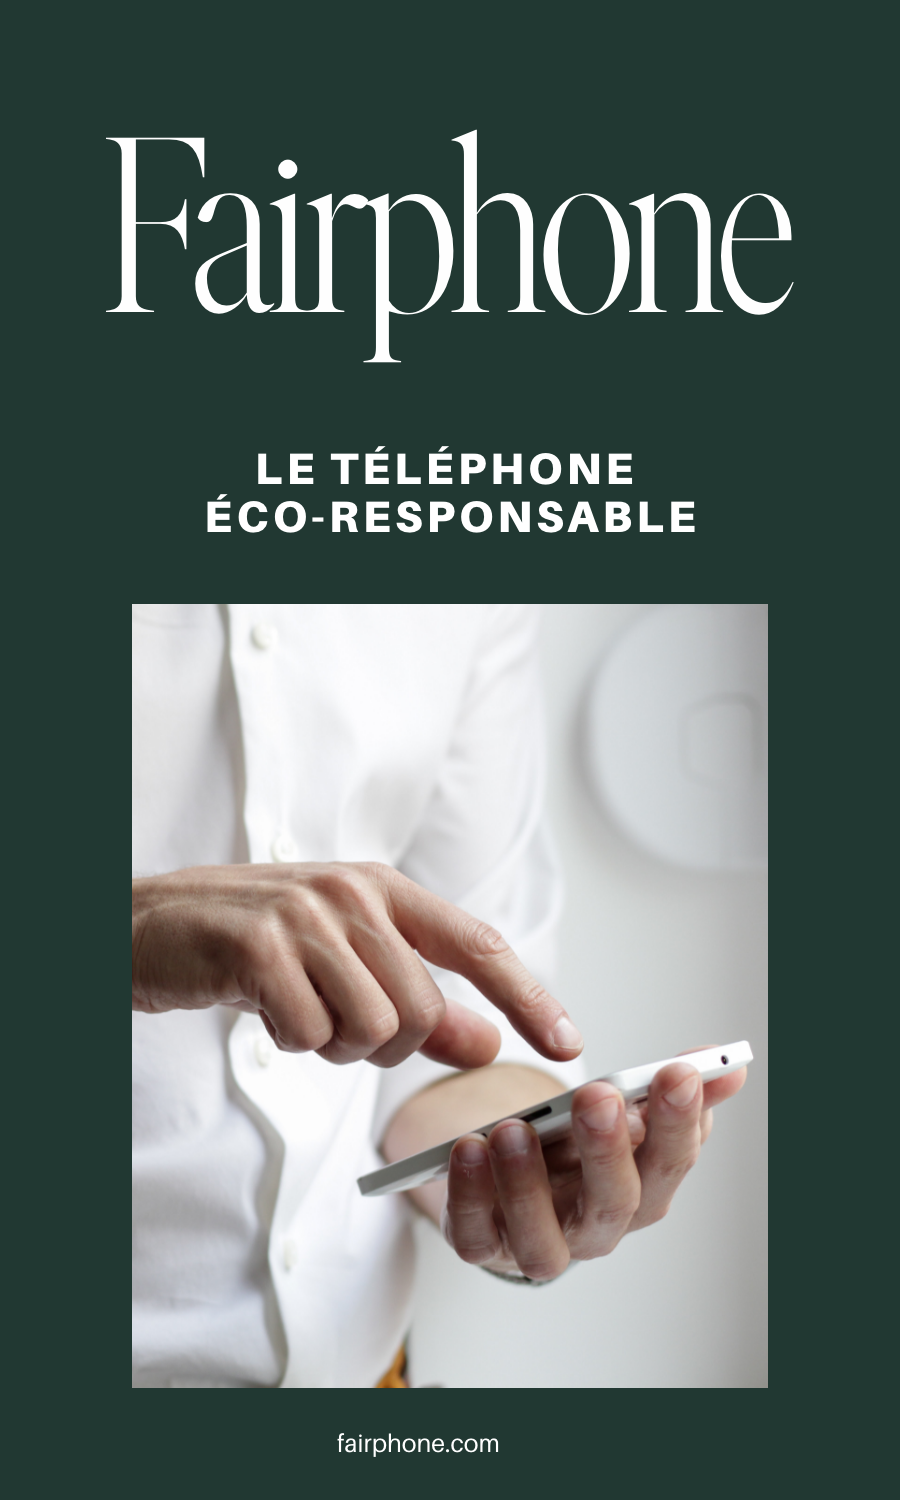 Fairphone – the eco-responsible telephone